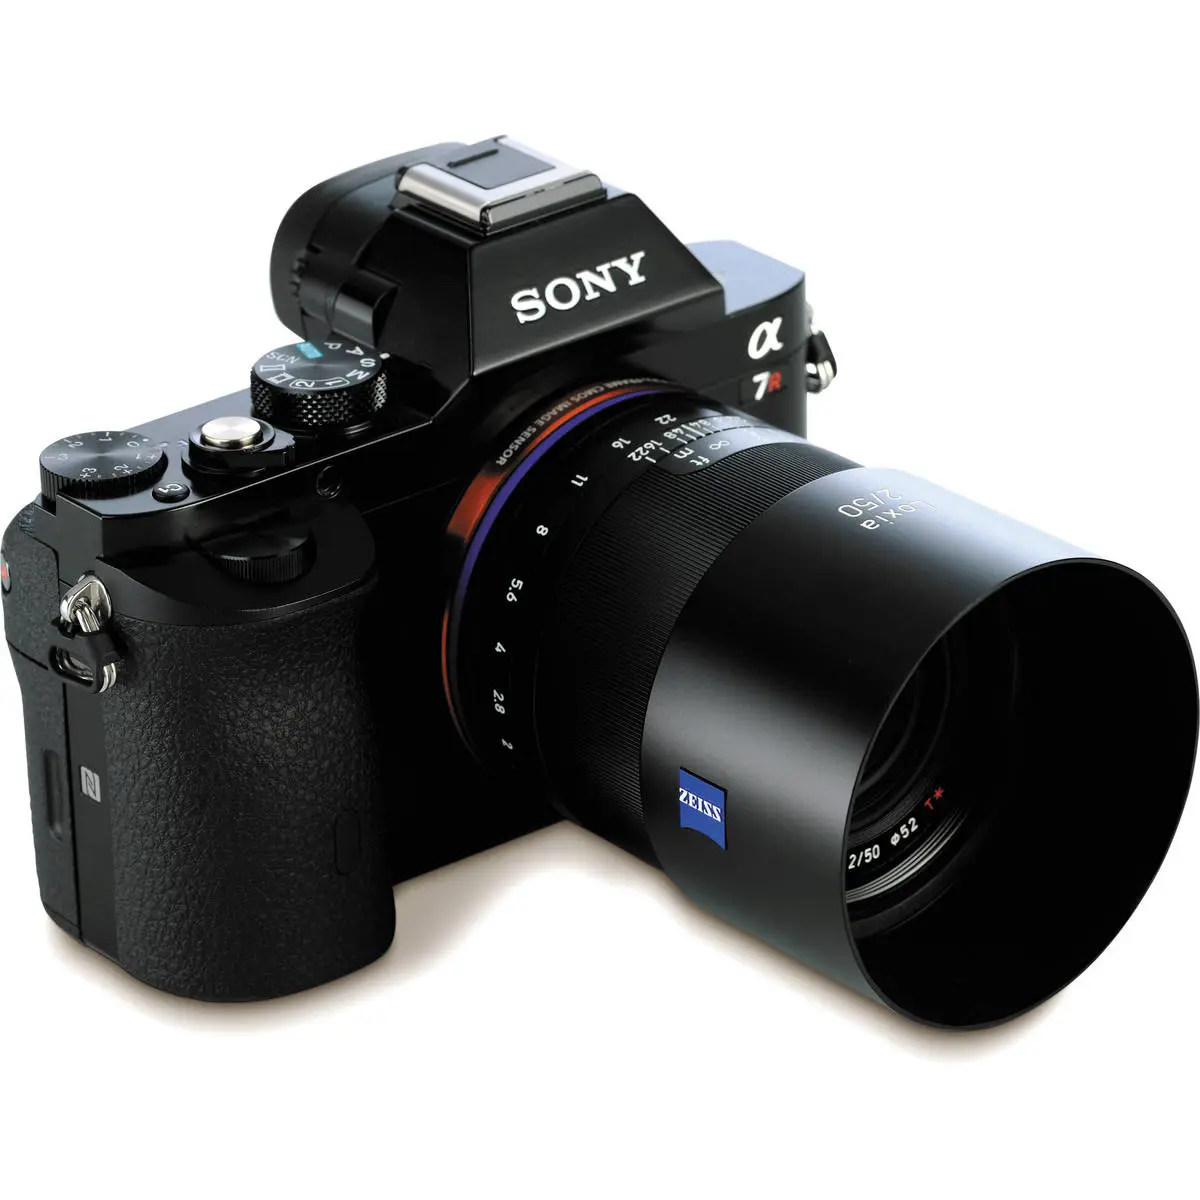 5. Carl Zeiss Loxia 50mm f/2 Planar T* (Sony E-Mount) Lens